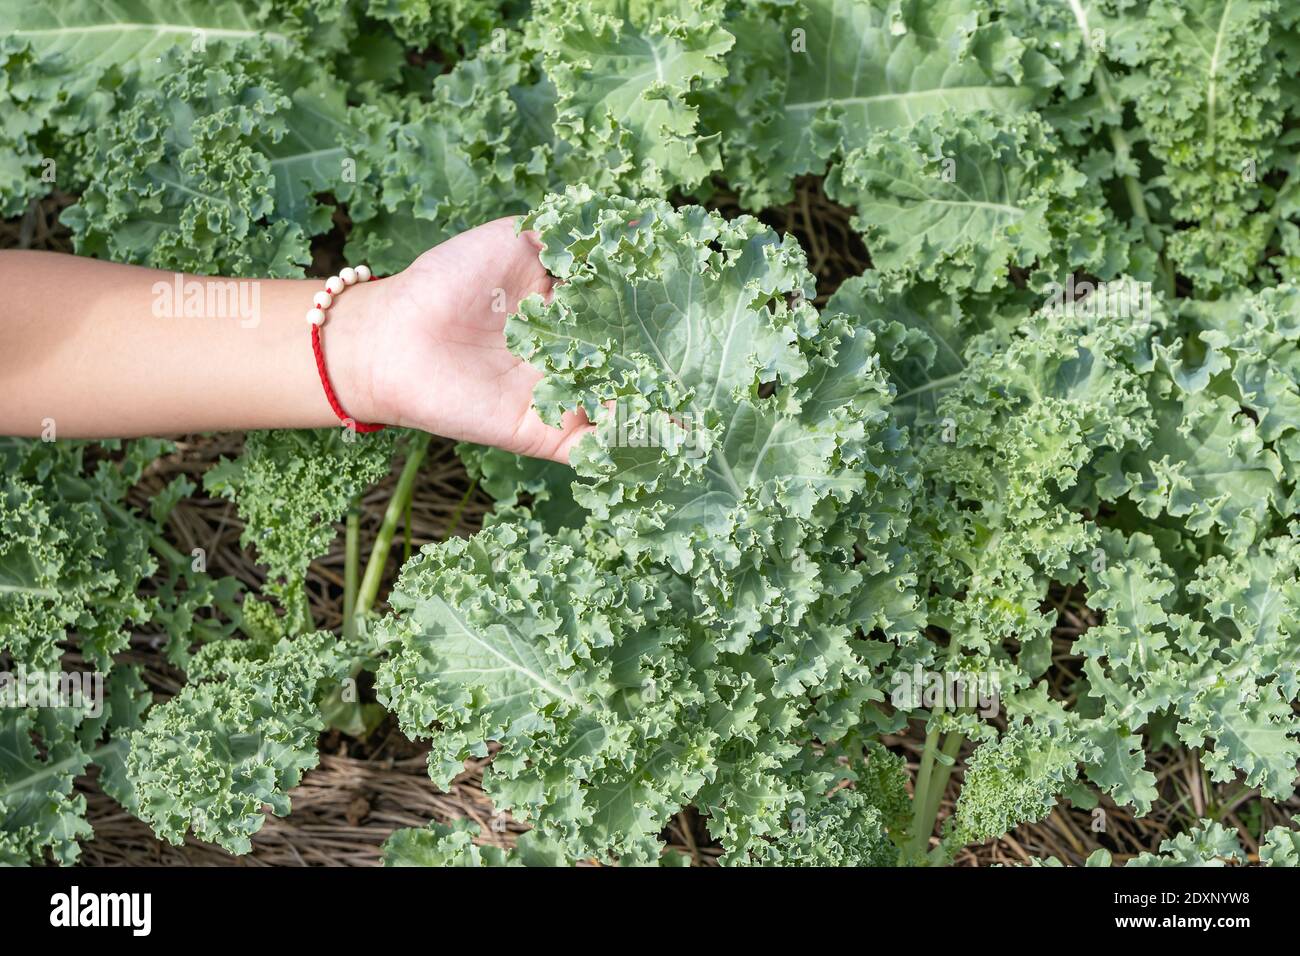 Curl leaf kale or Brassica oleracea grown in hand Stock Photo